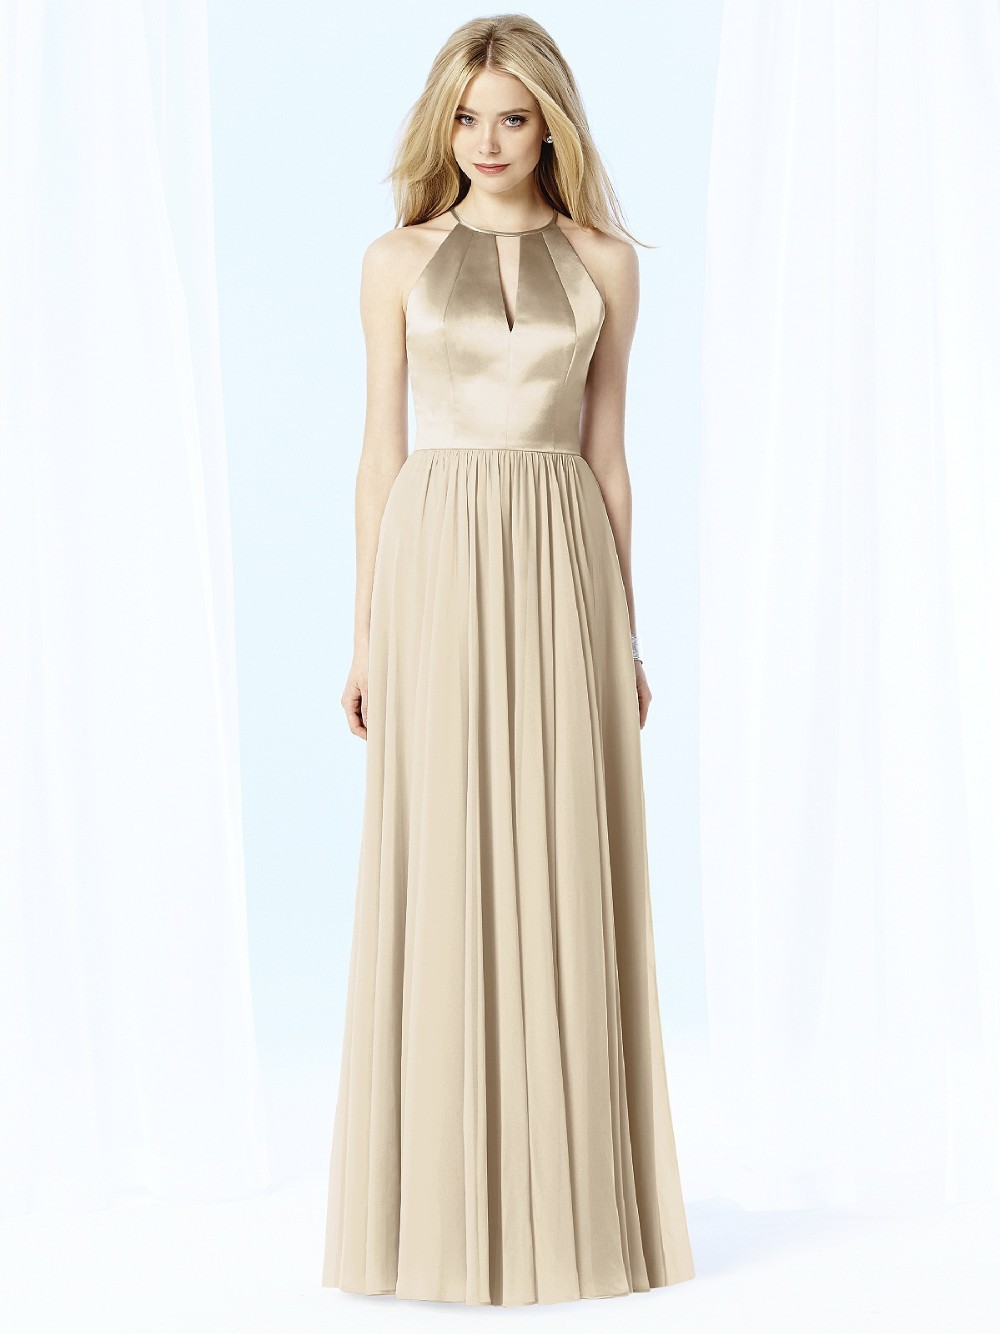 Sell Bridesmaid Dresses - Ocodea.com